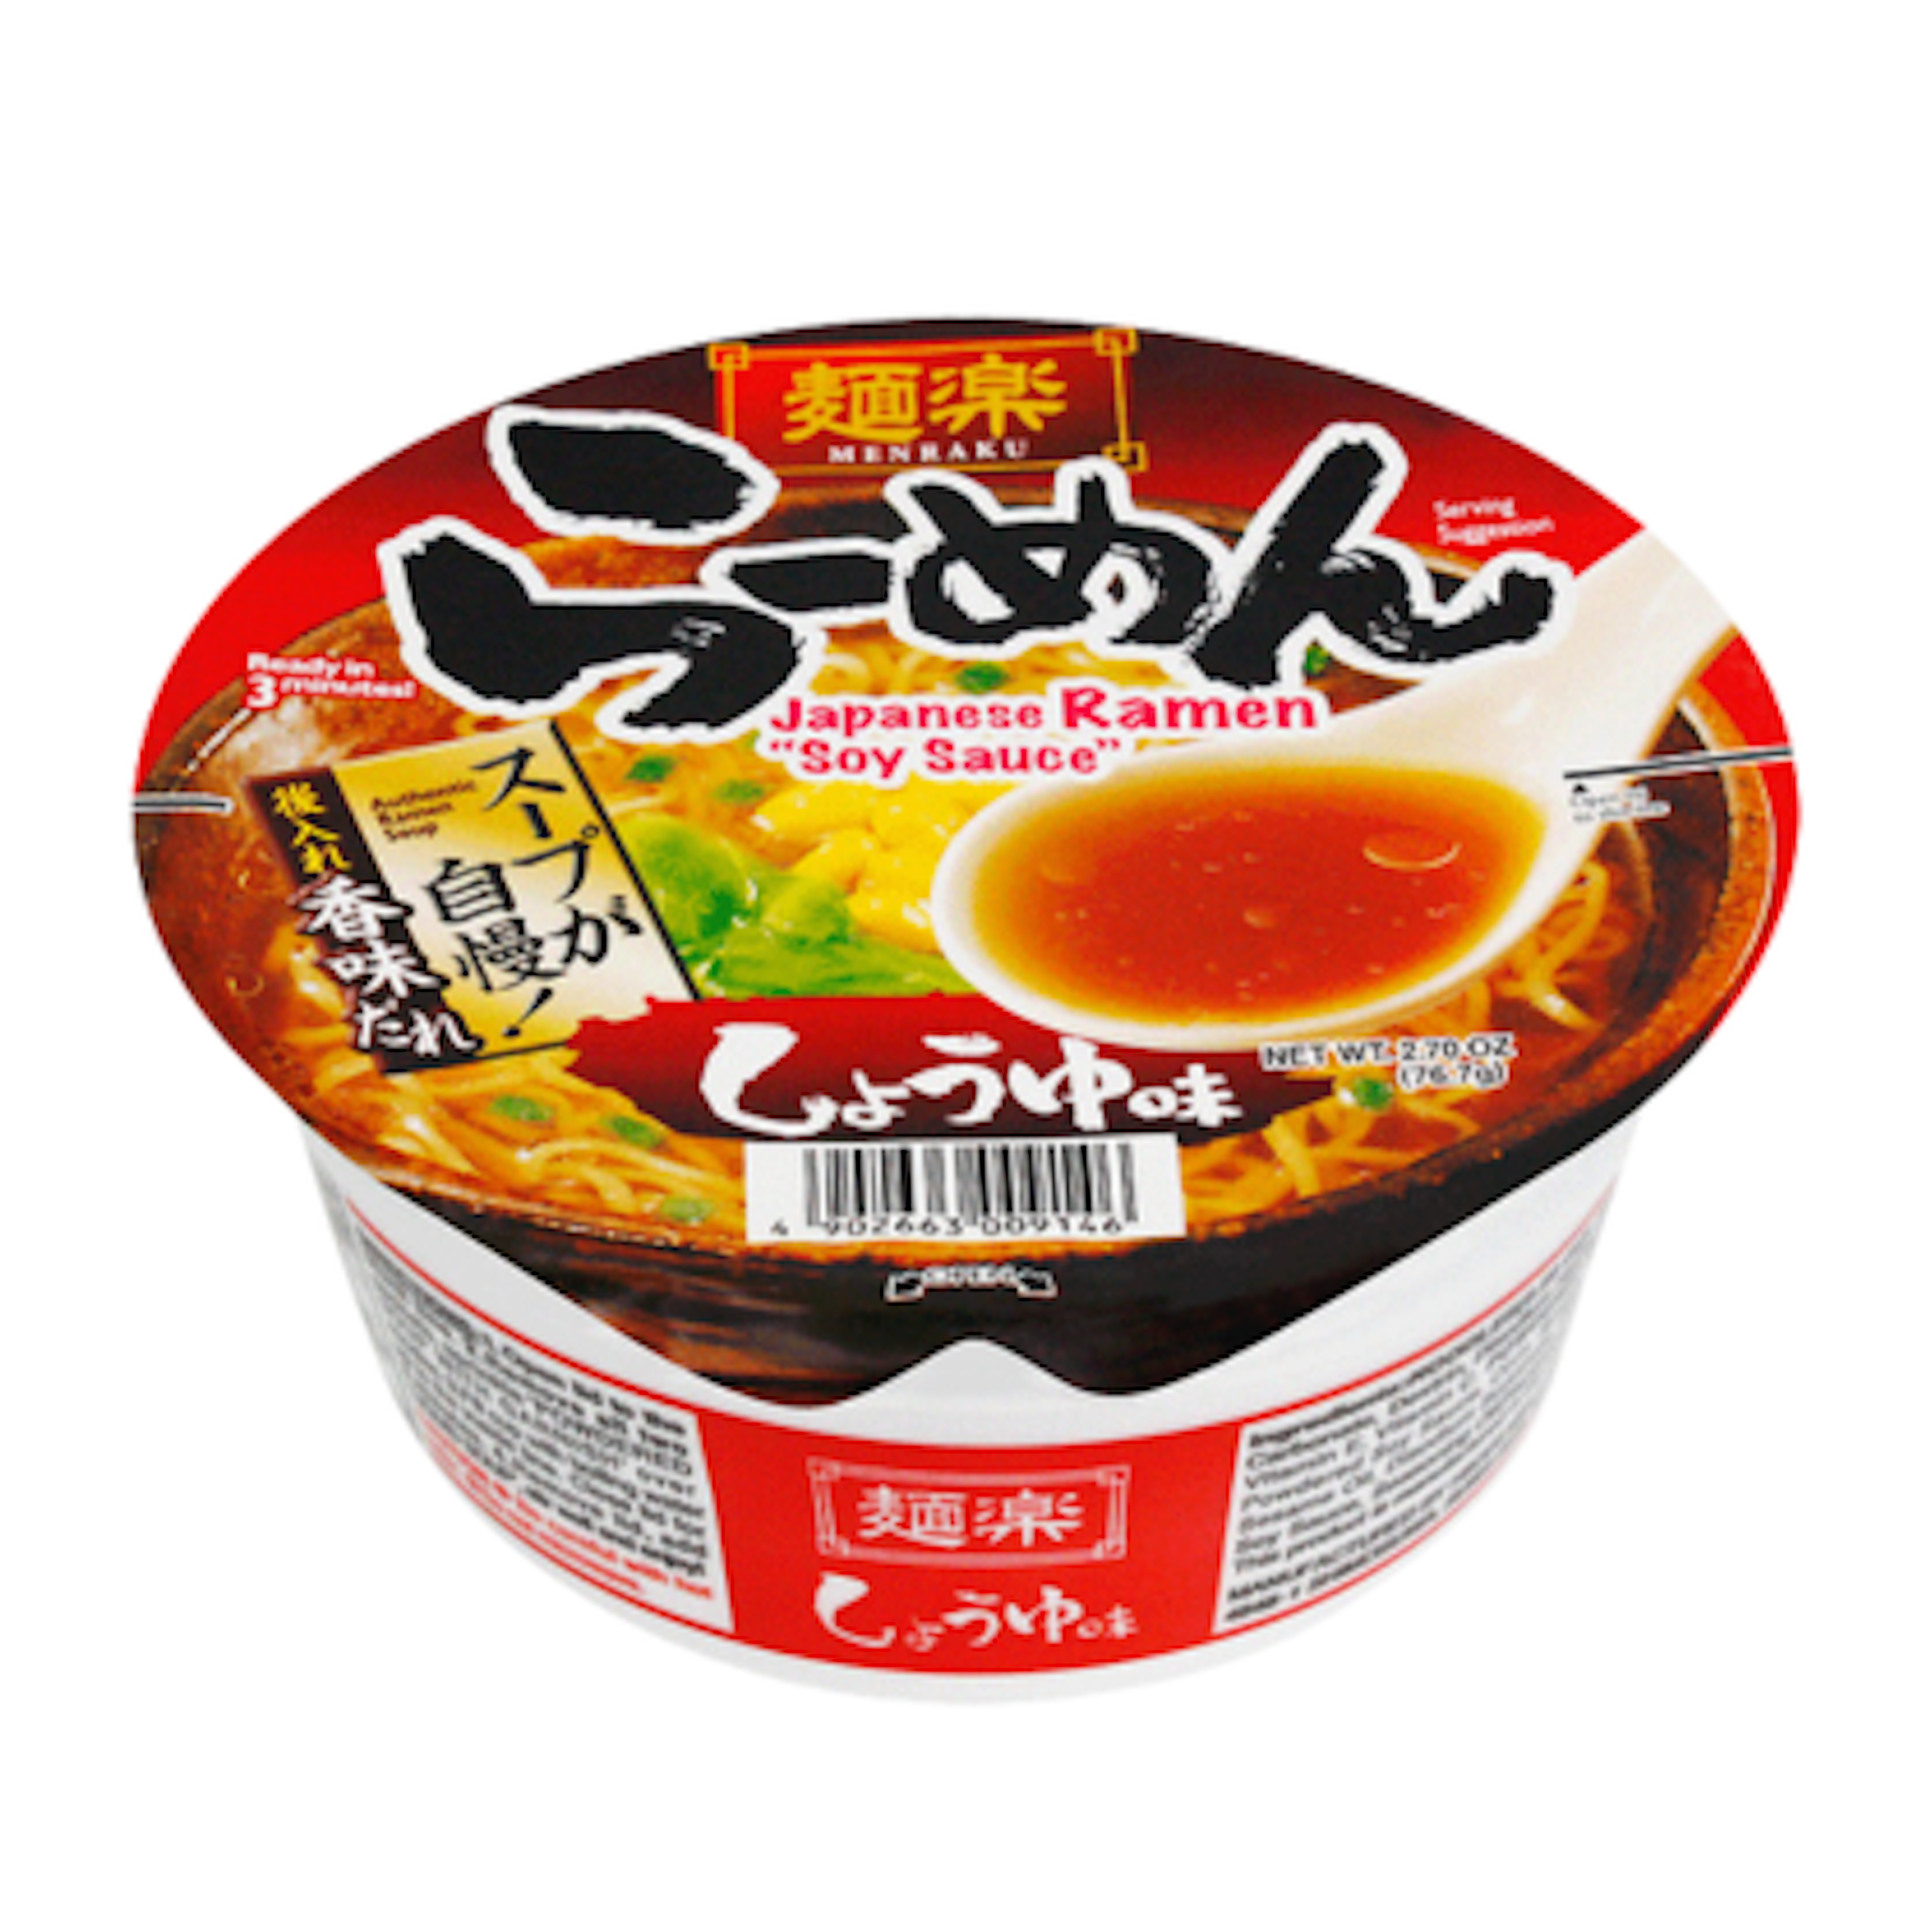 Hikari Menraku Japanische Soy Sauce Ramen Cup - Authentischer japanischer Soy Sauce Ramen, 76.9g